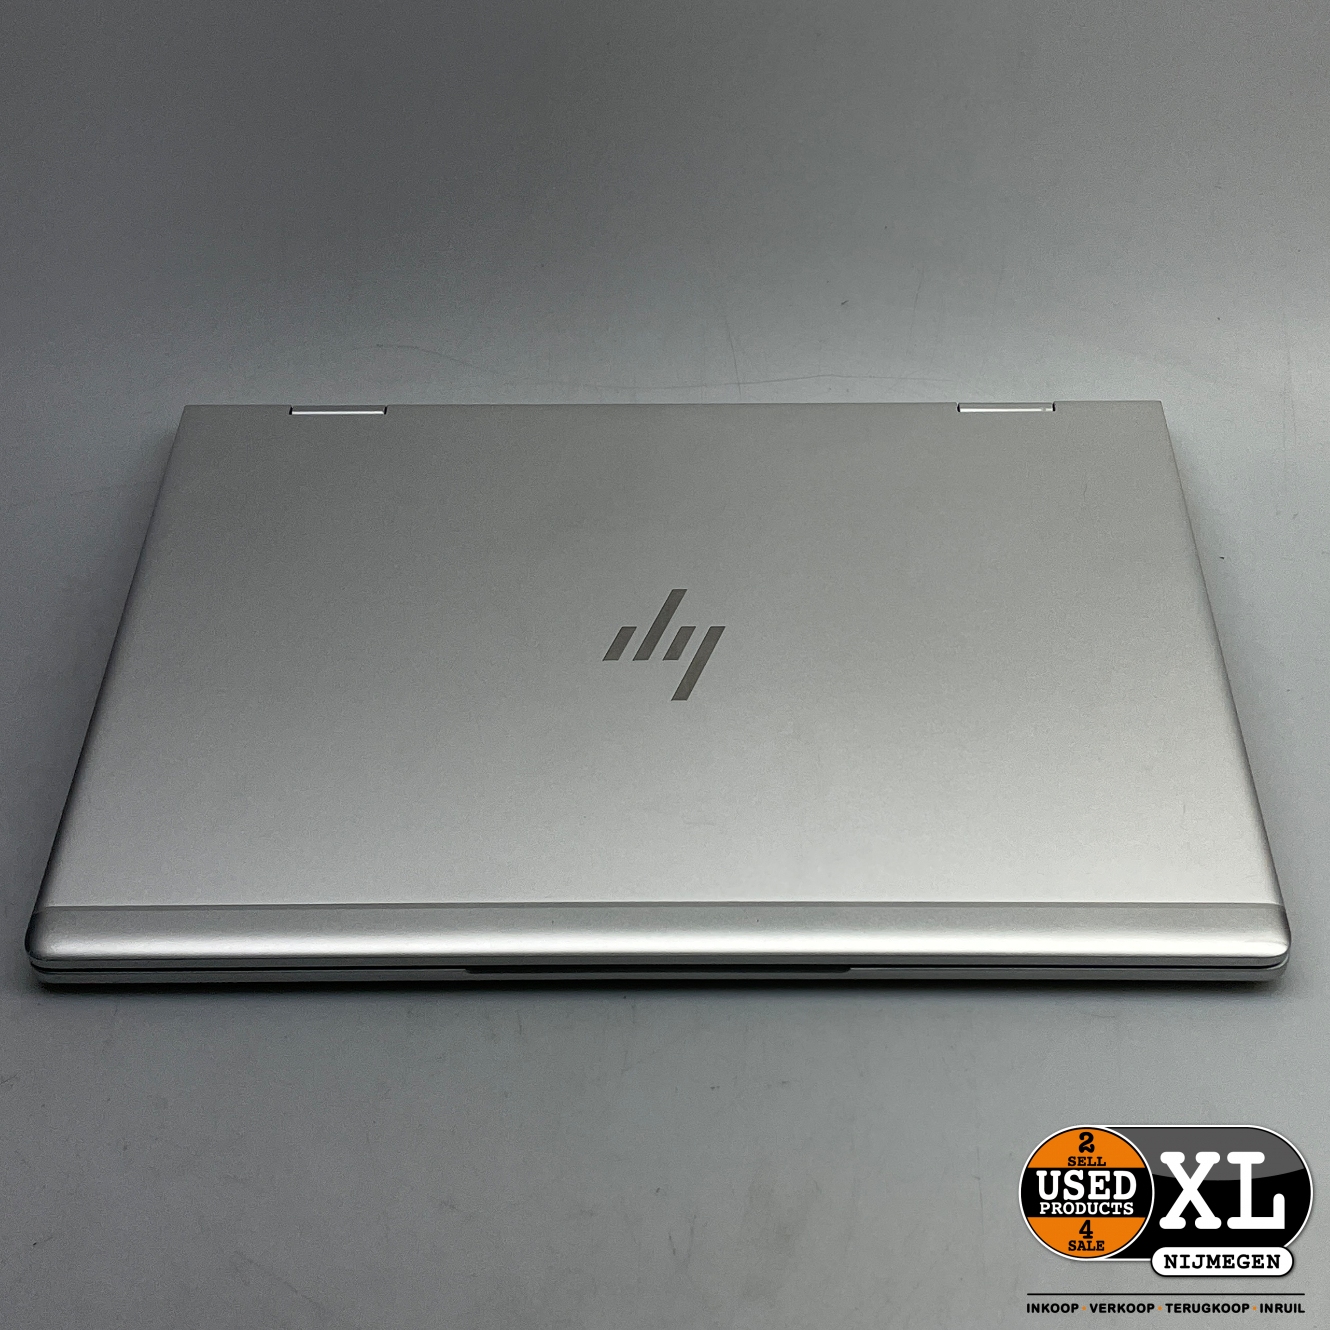 HP Elitebook X360 830 G5 Elitebook Laptop | i5 8GB 250GB | Nette Staat -  Used Products Nijmegen XL